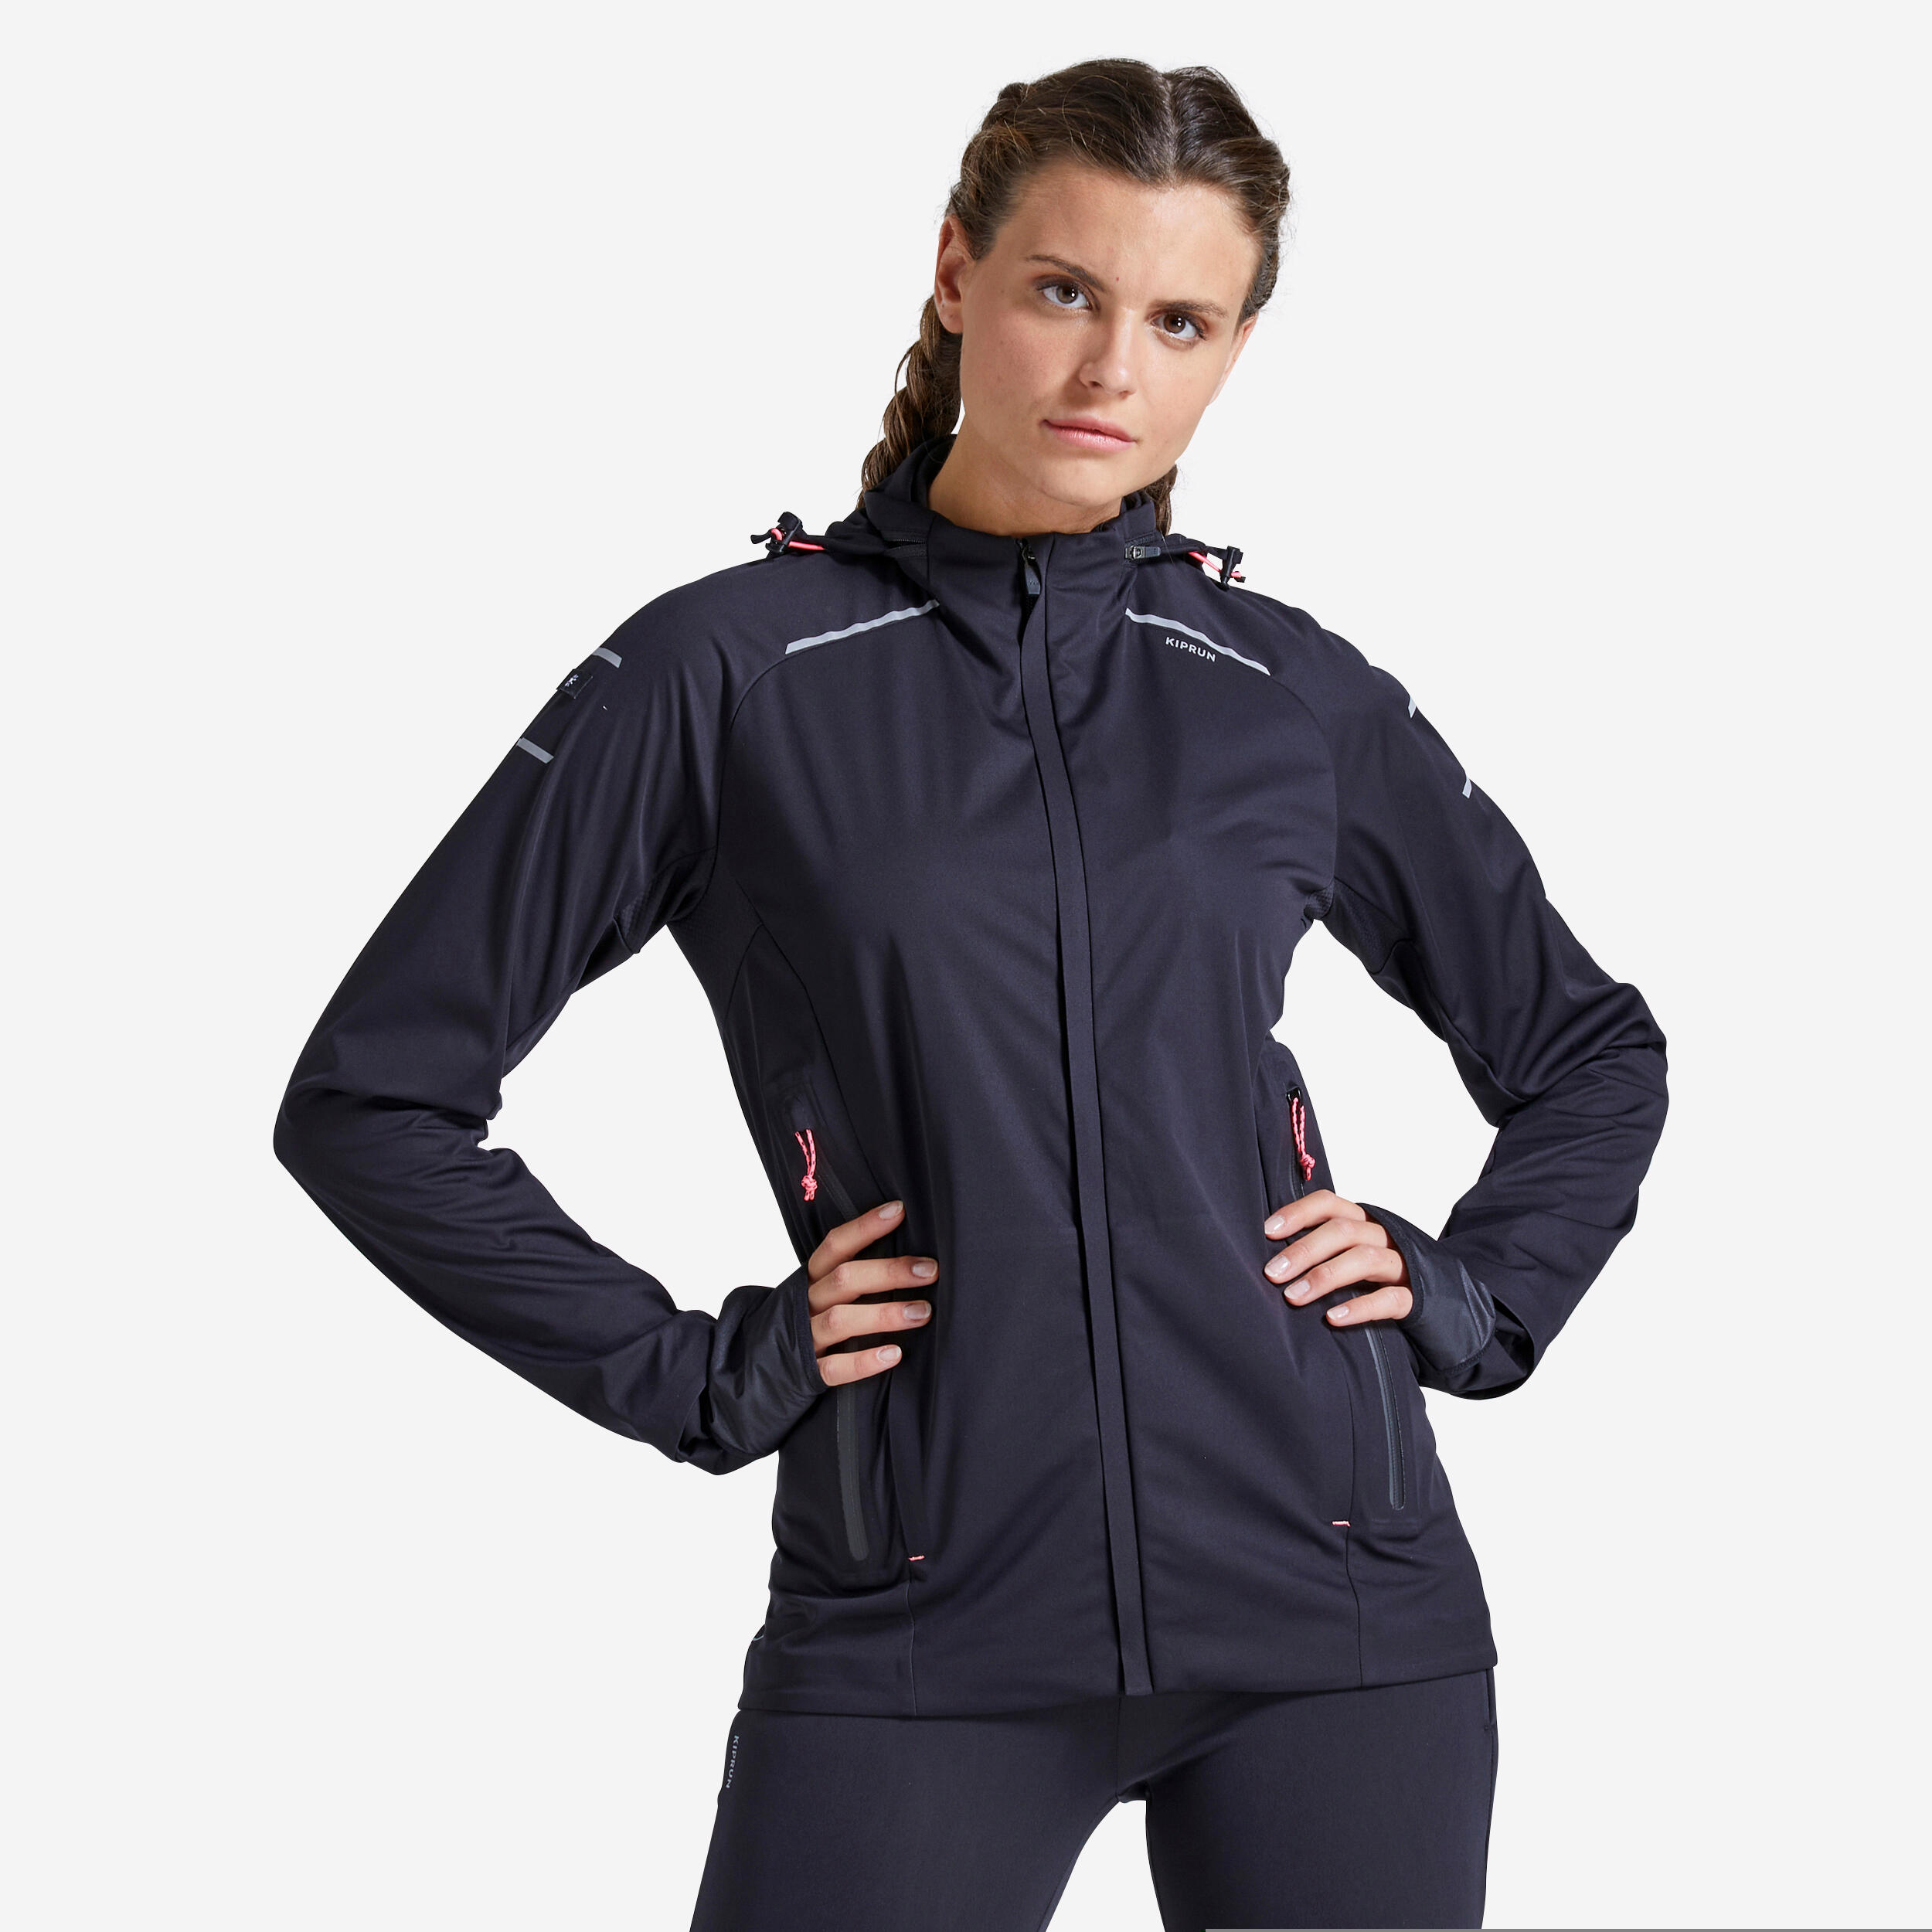 Super Lightweight and Visible J.CARP Women's Packable Windbreaker Jacket Outdoor Active Cycling Running Skin Coat 